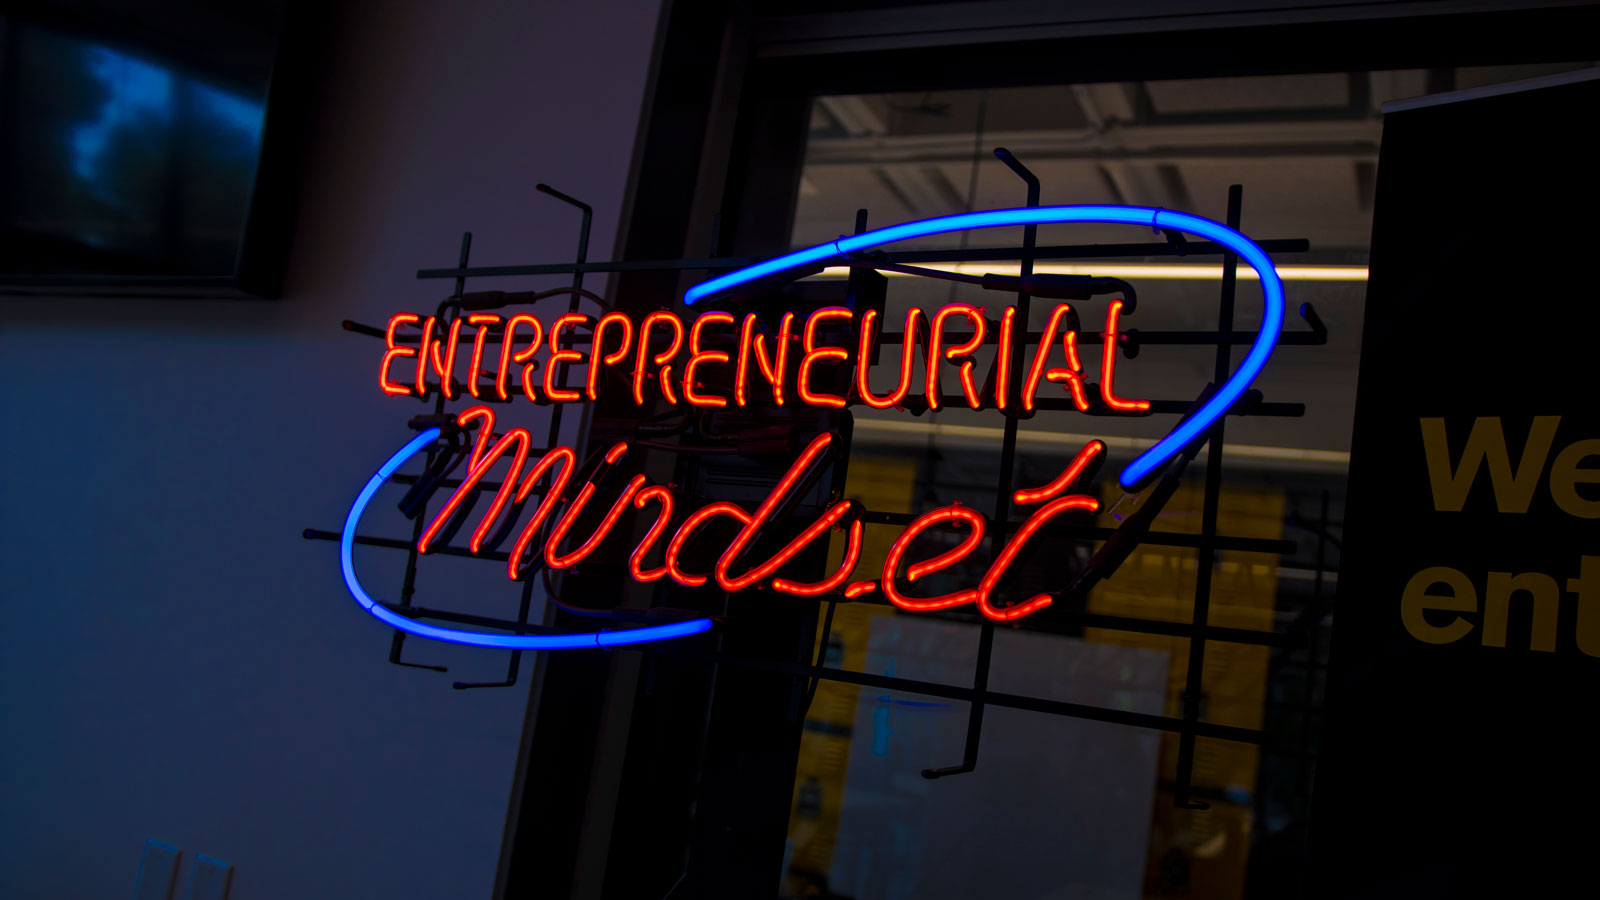 neon sign that says "Entrepreneurial Mindset"